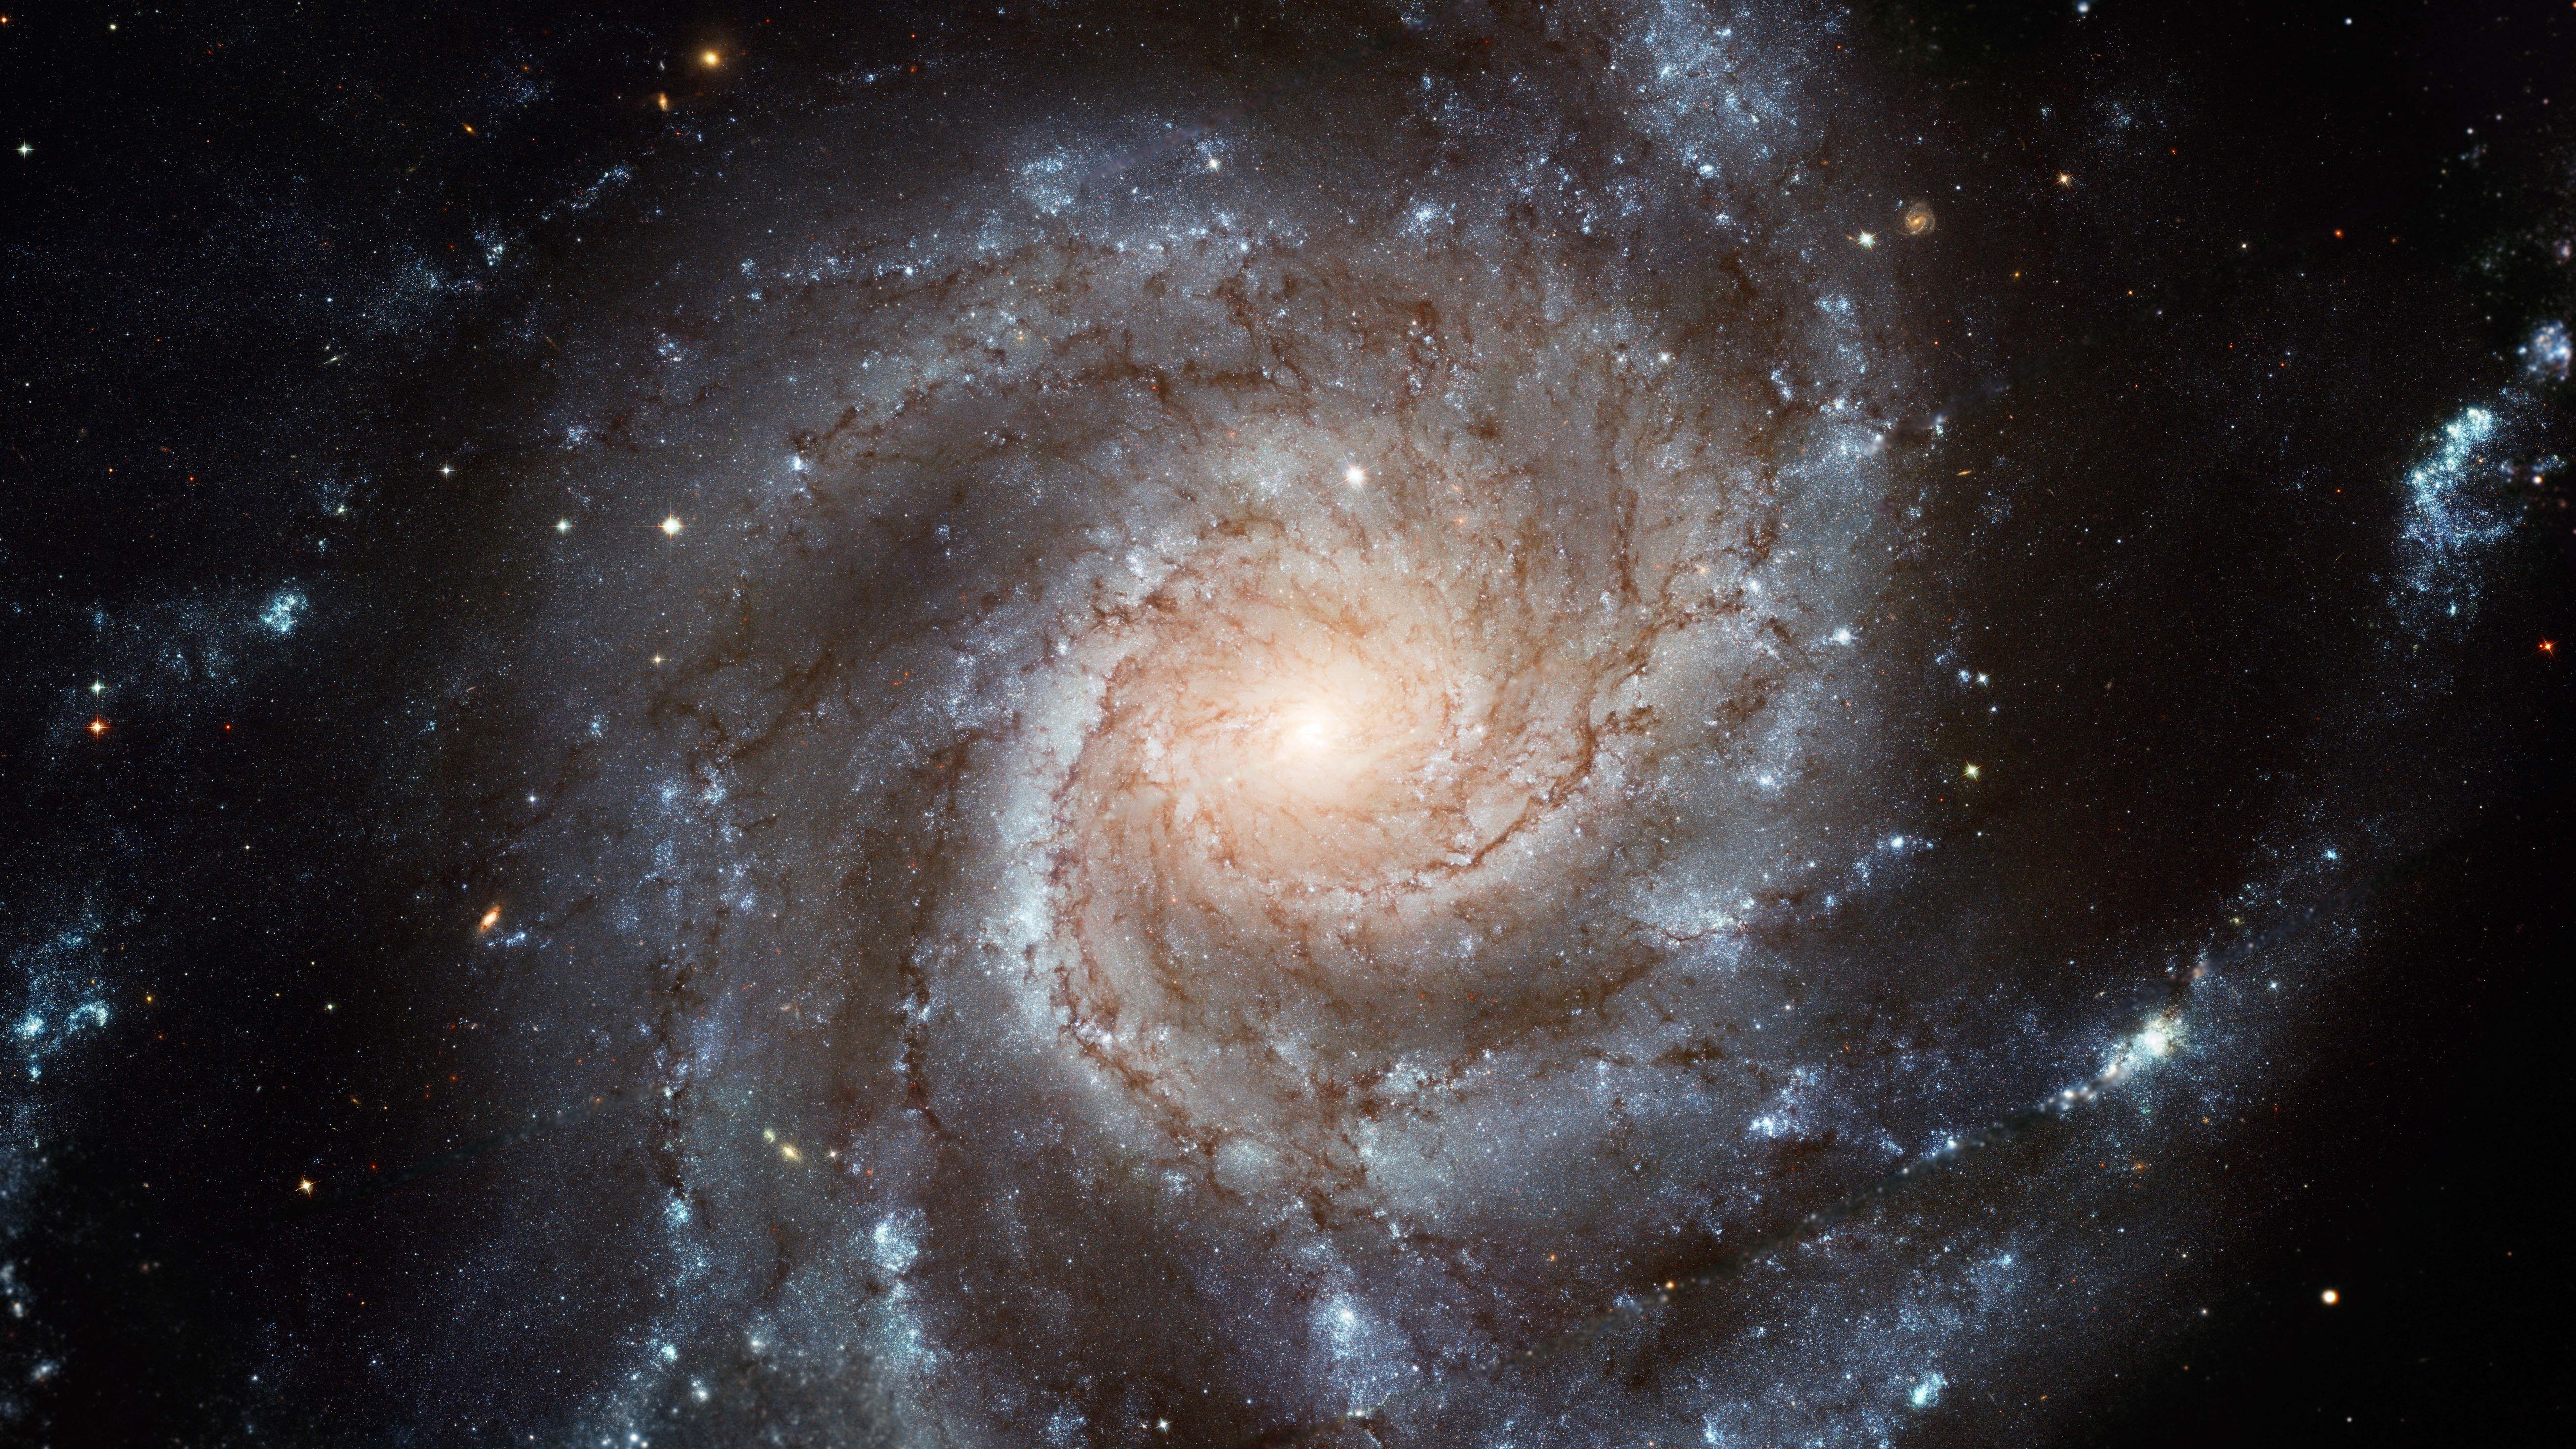 spiral galaxies wallpaper